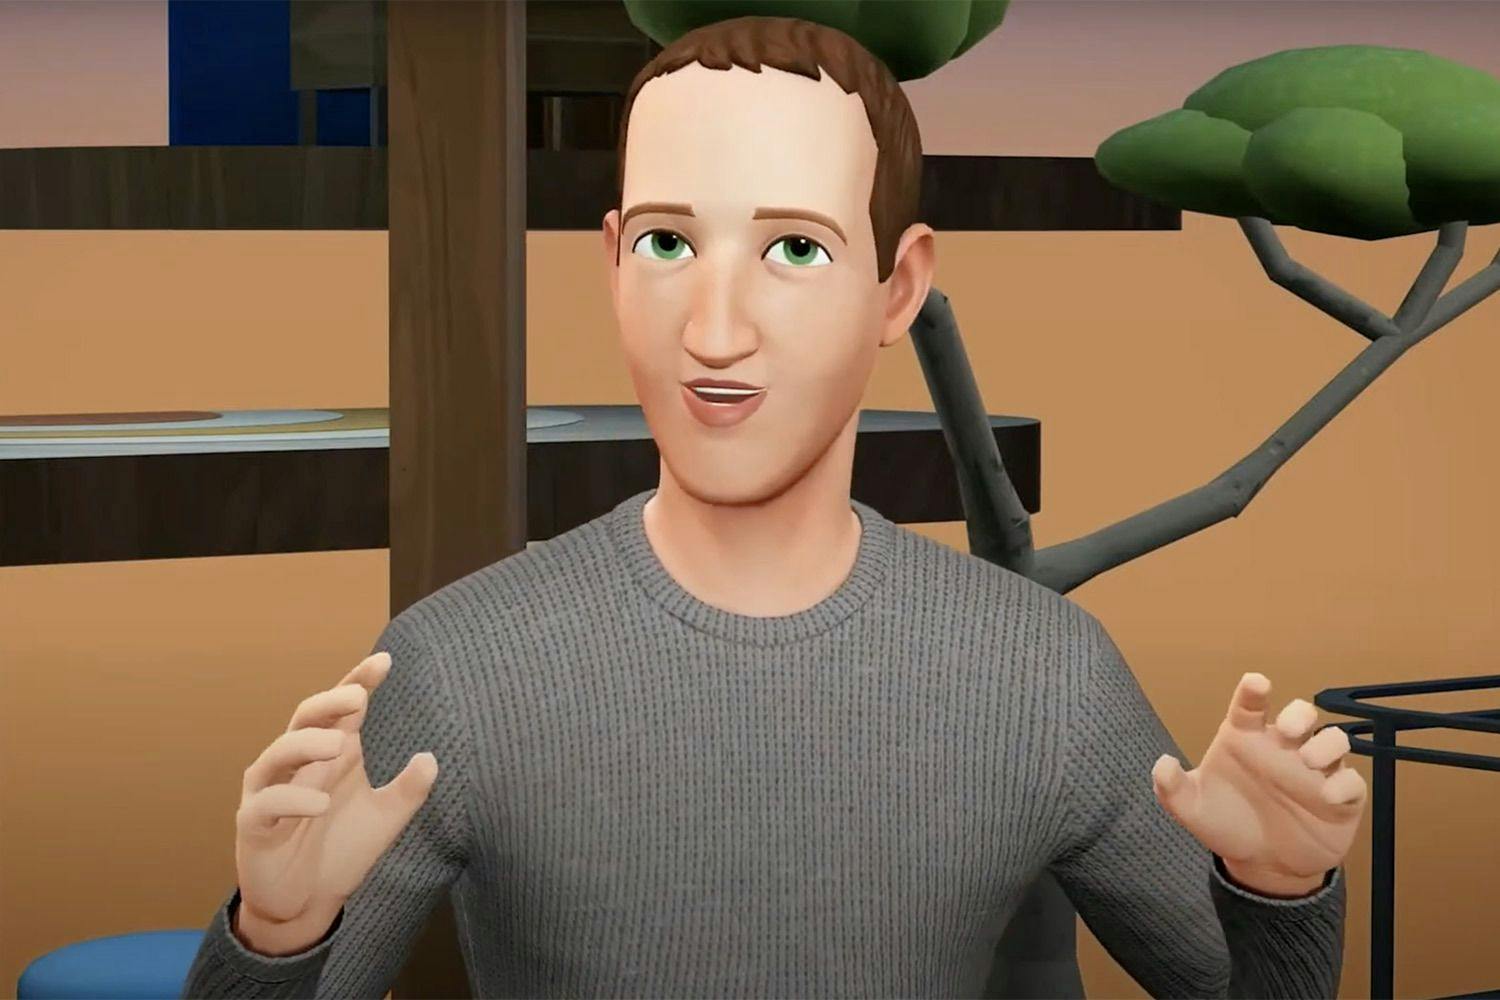 An avatar of Meta CEO Mark Zuckerberg